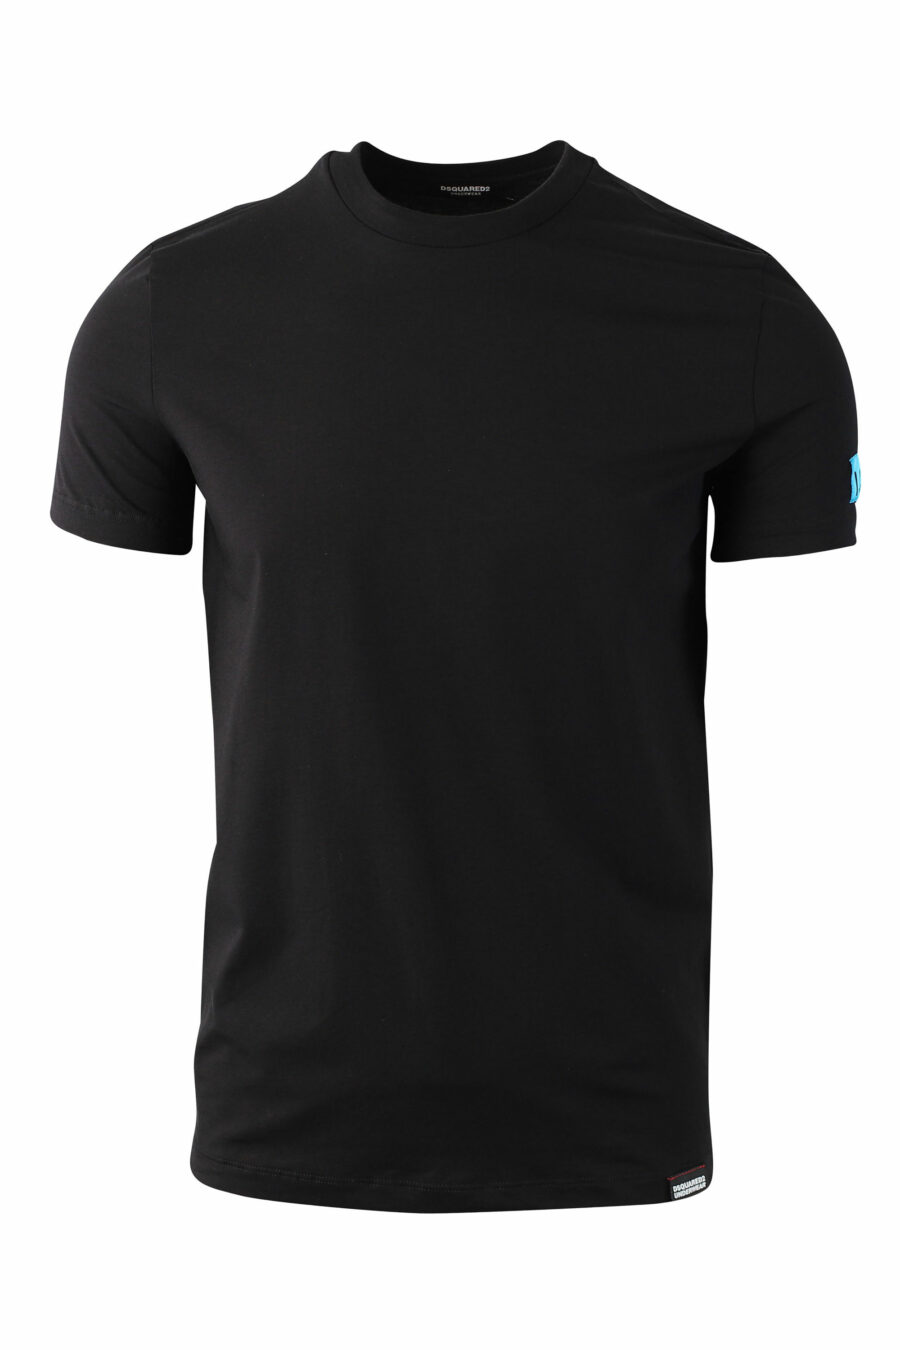 T-shirt noir avec mini-logo bleu "icon" sur la manche - IMG 0038 1